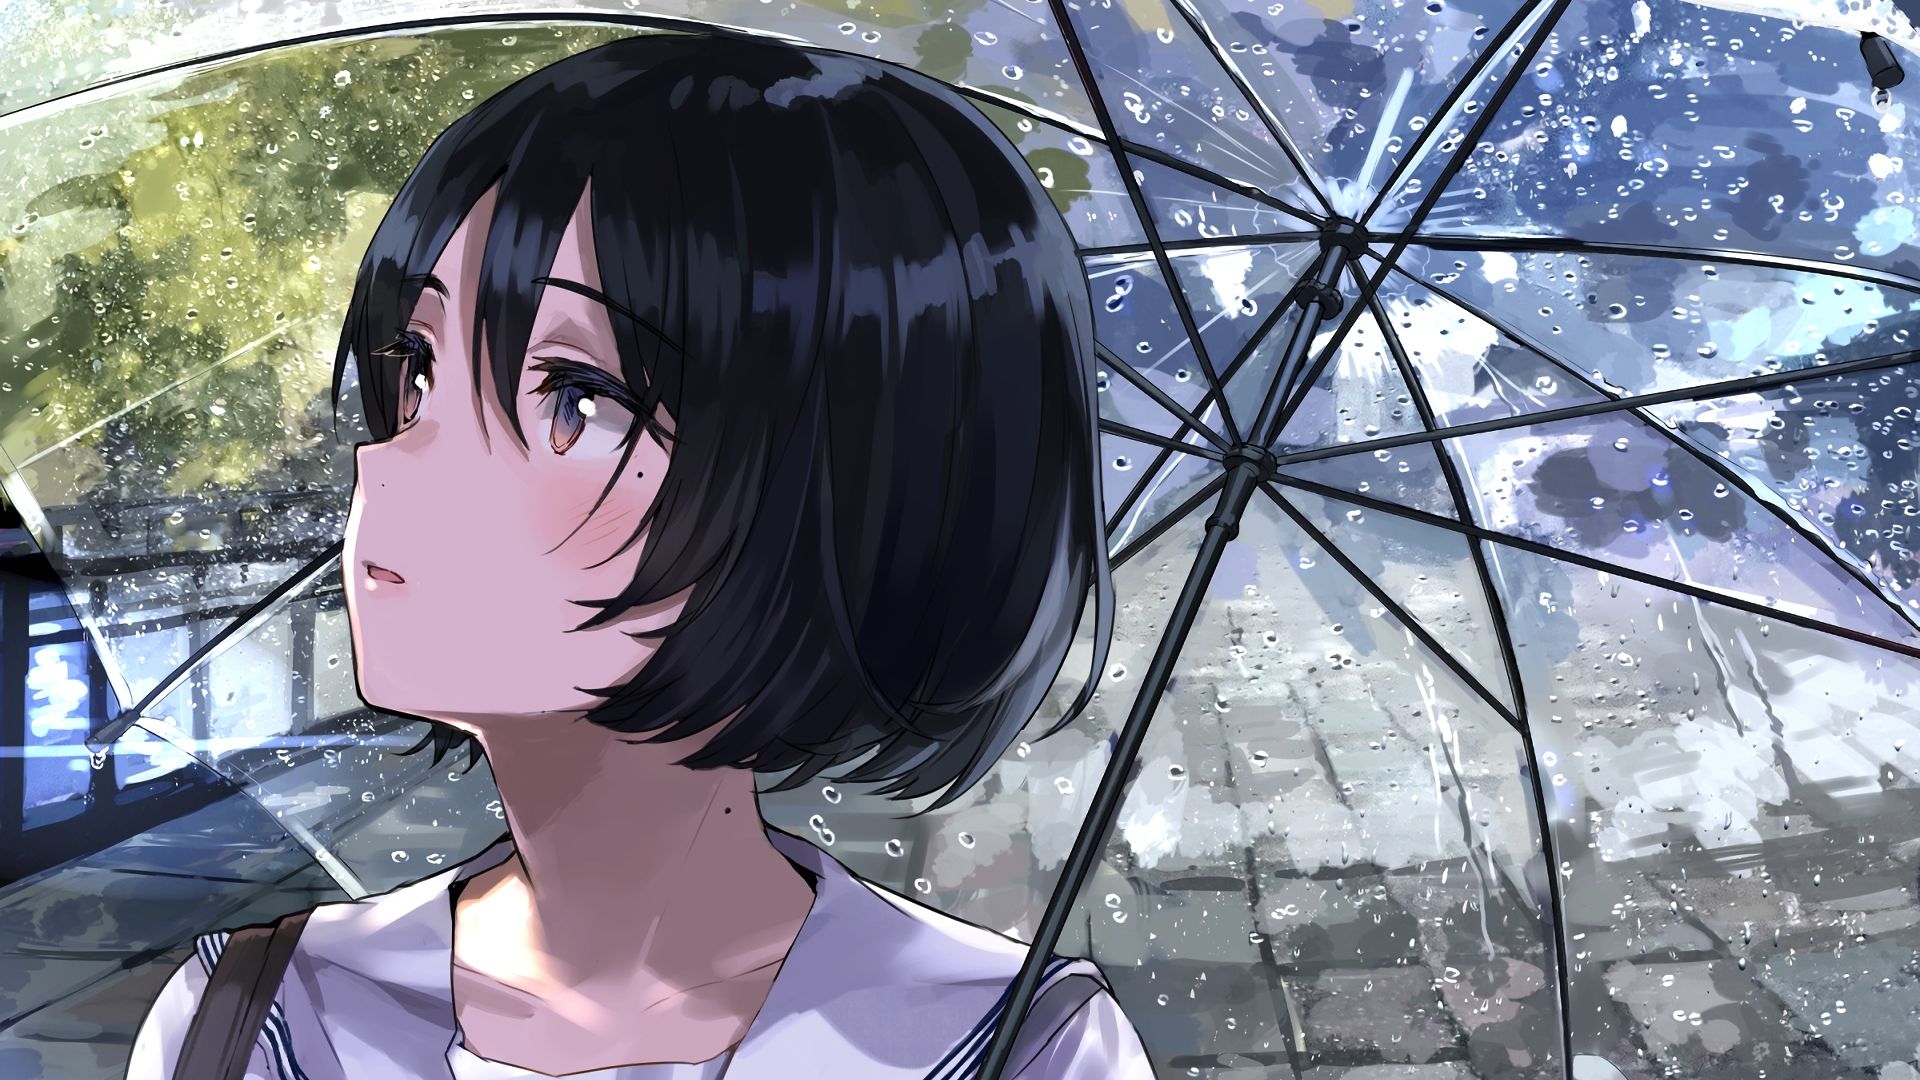 Desktop Wallpaper Umbrella, Anime Girl, Cute, Rain, Original, Hd Image,  Picture, Background, 3d8b6e